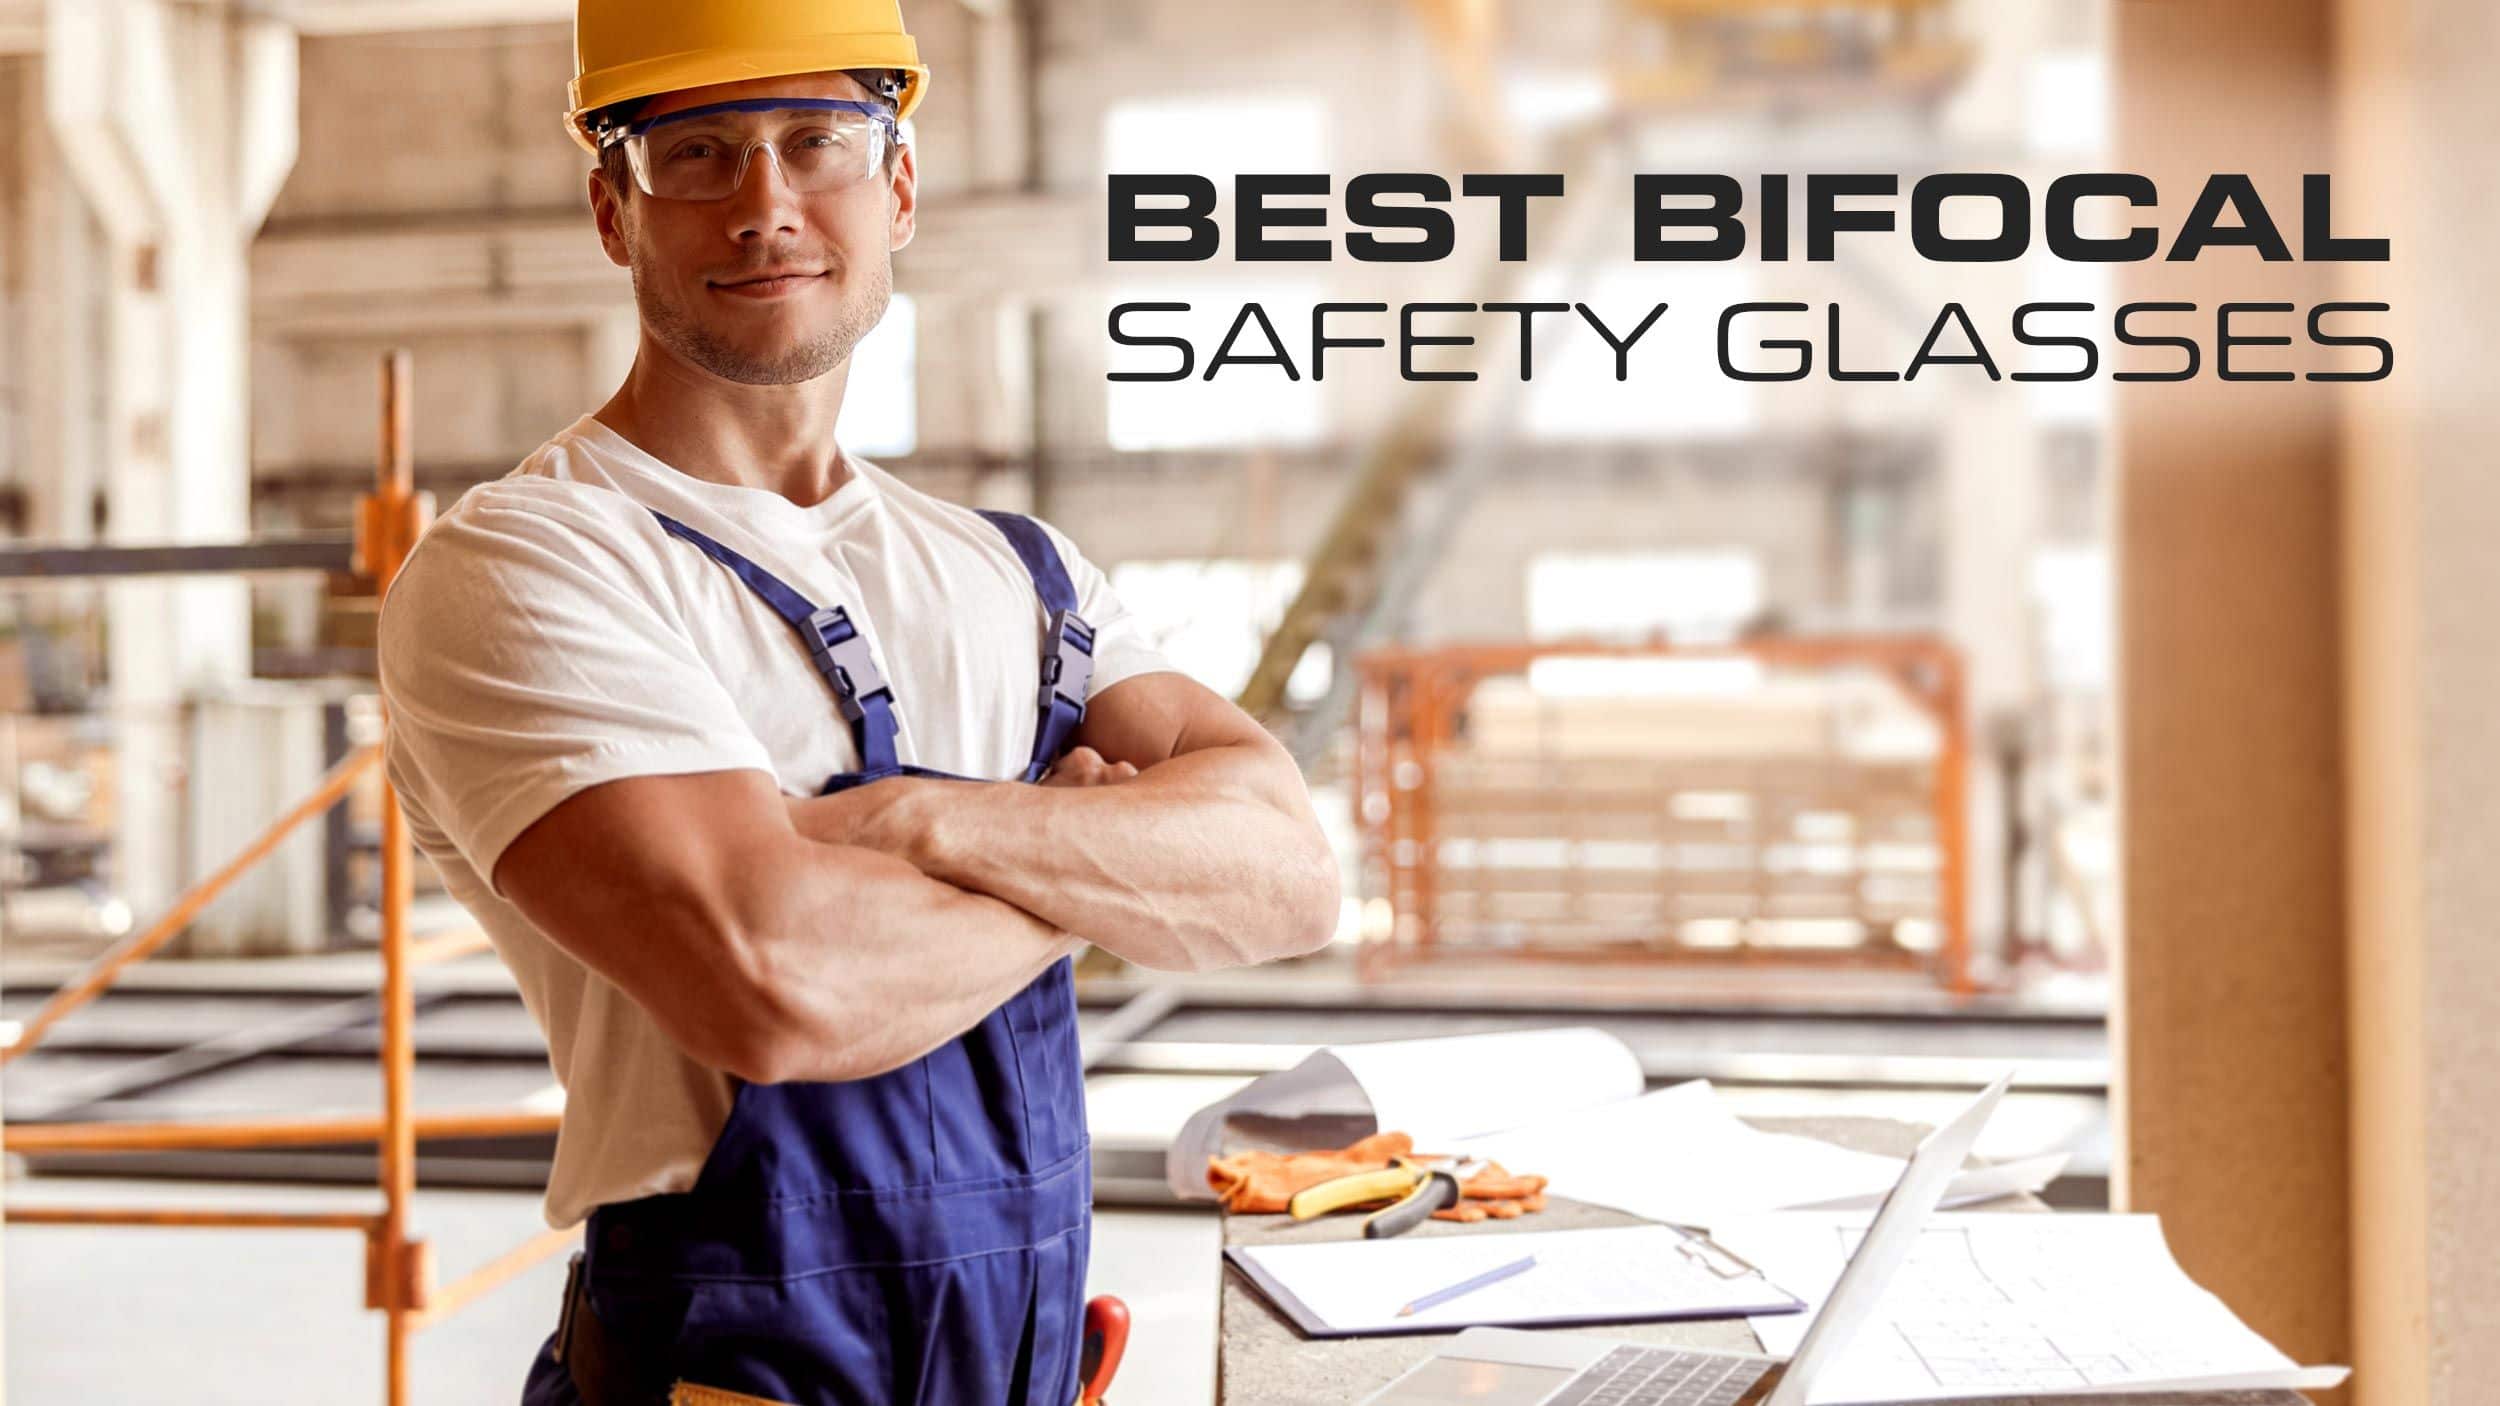 Best Bifocal Safety Glasses Header